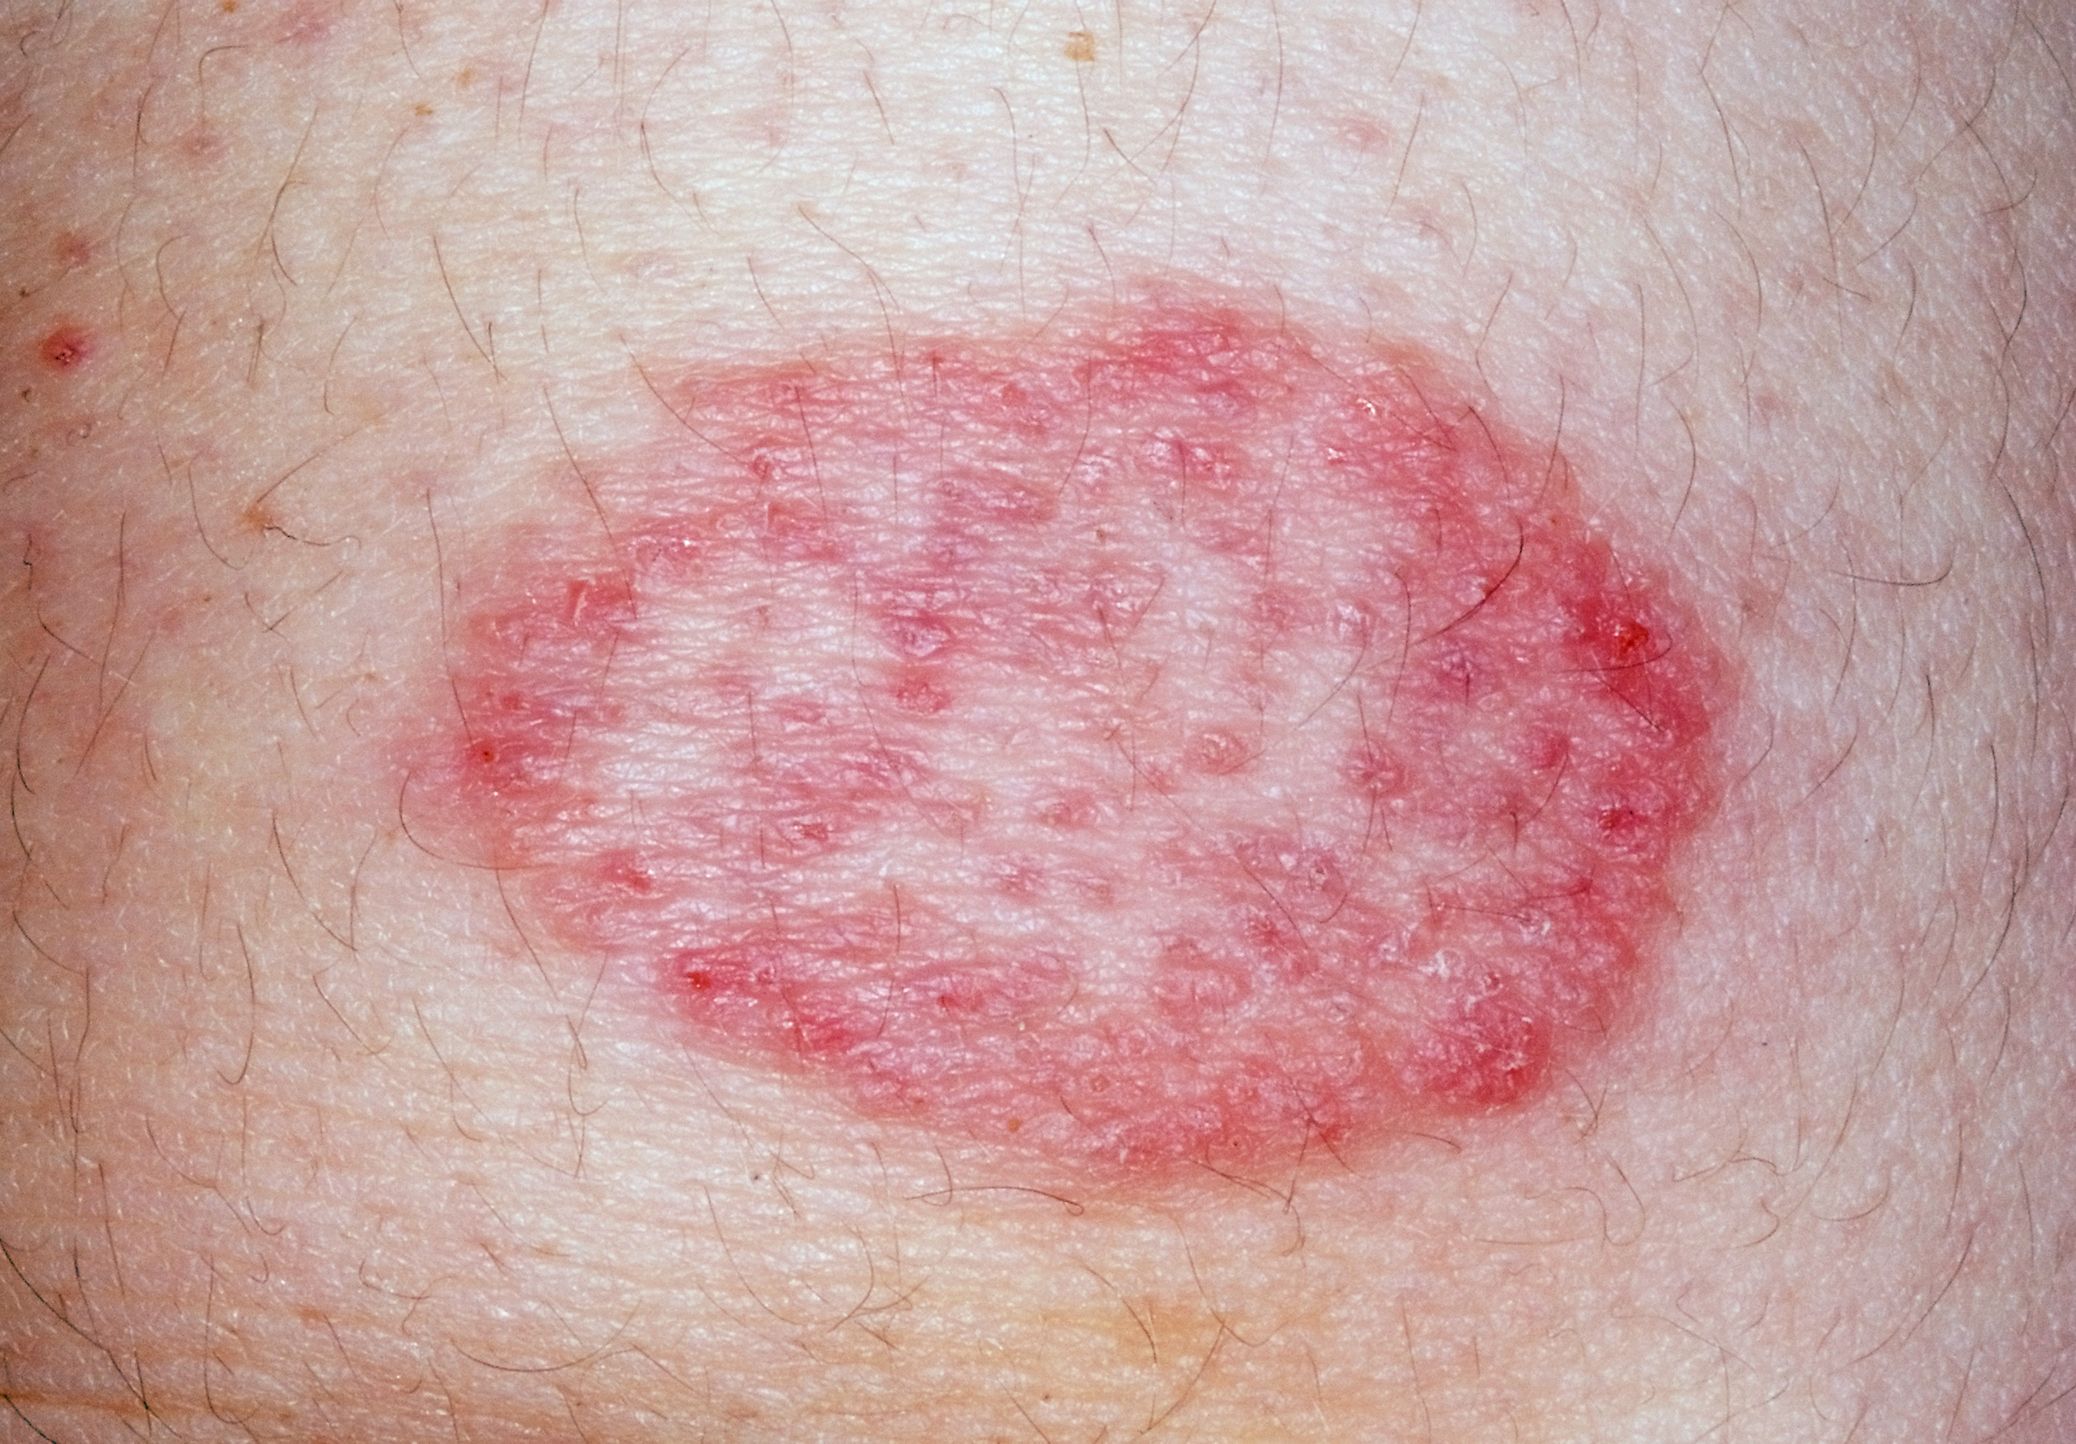 tiny-red-spots-on-skin-lupon-gov-ph